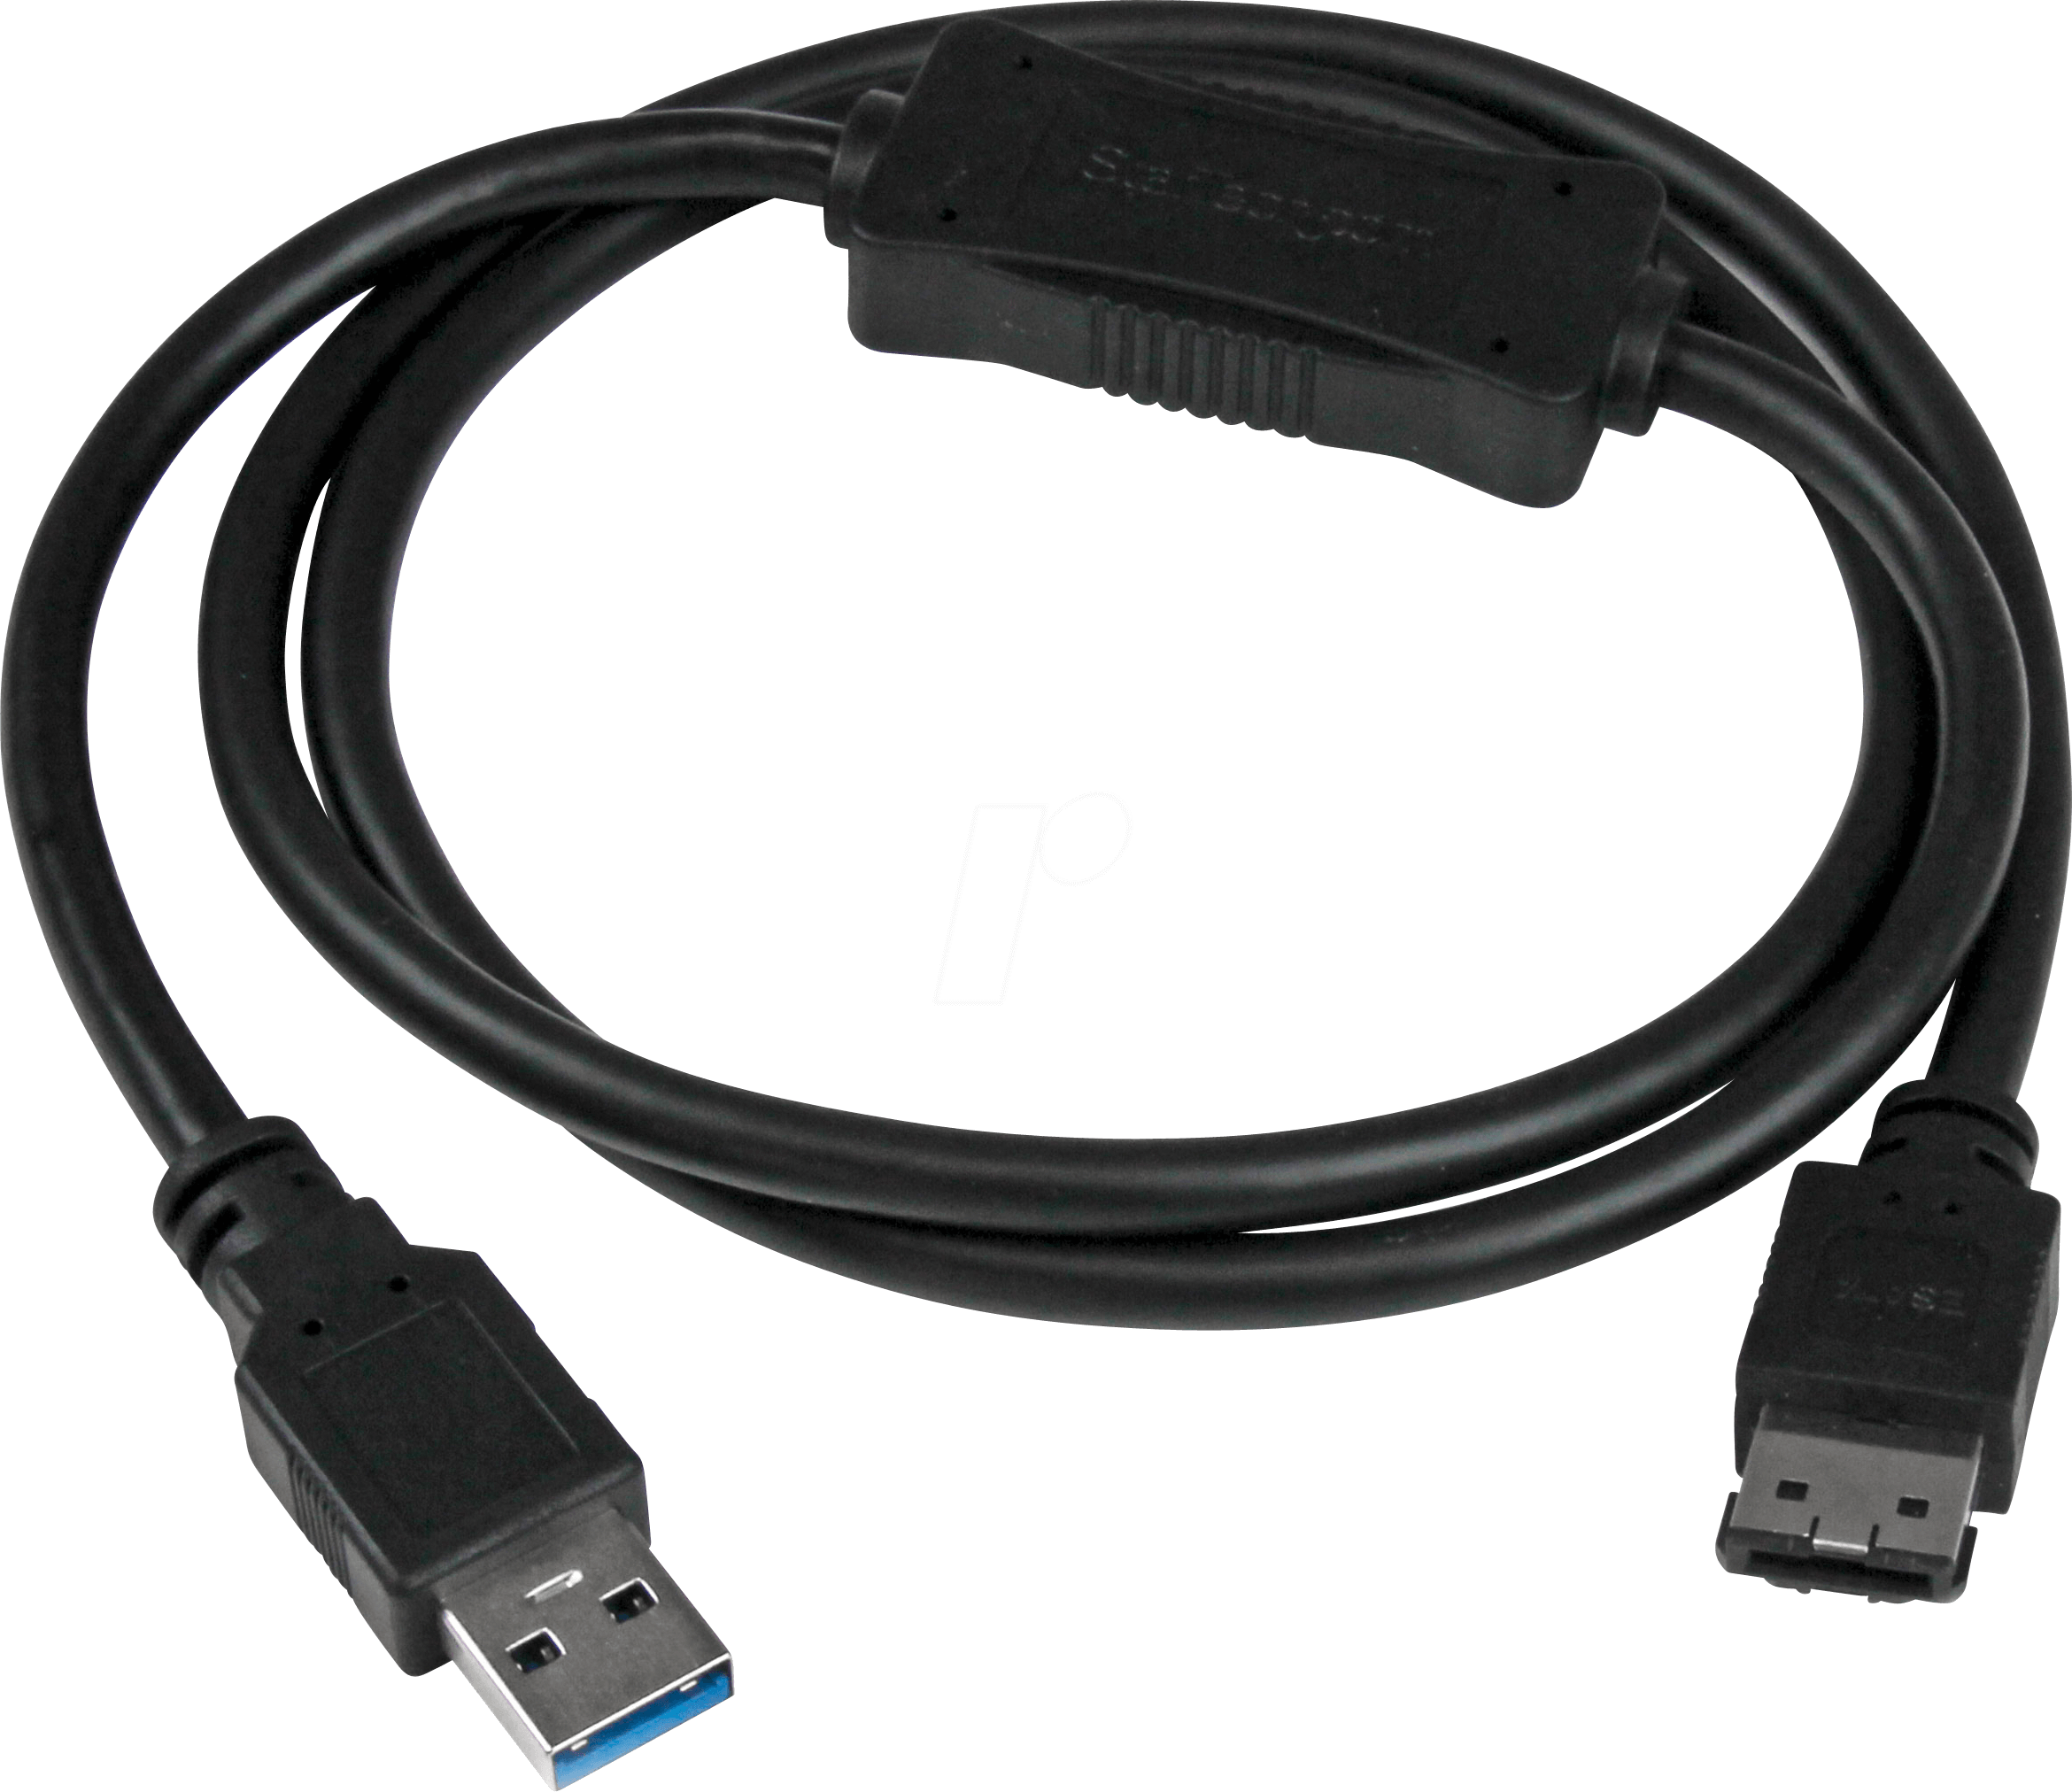 Adapter Kompatibel Handy//Pad OTG Adapter USB OTG Kabel Adapter Stecker USB Buchse Adapter USB Buchse OTG Adapter Unterst/ützung IOS 12 Vorher und Nachher Amatage USB Kamera Adapter